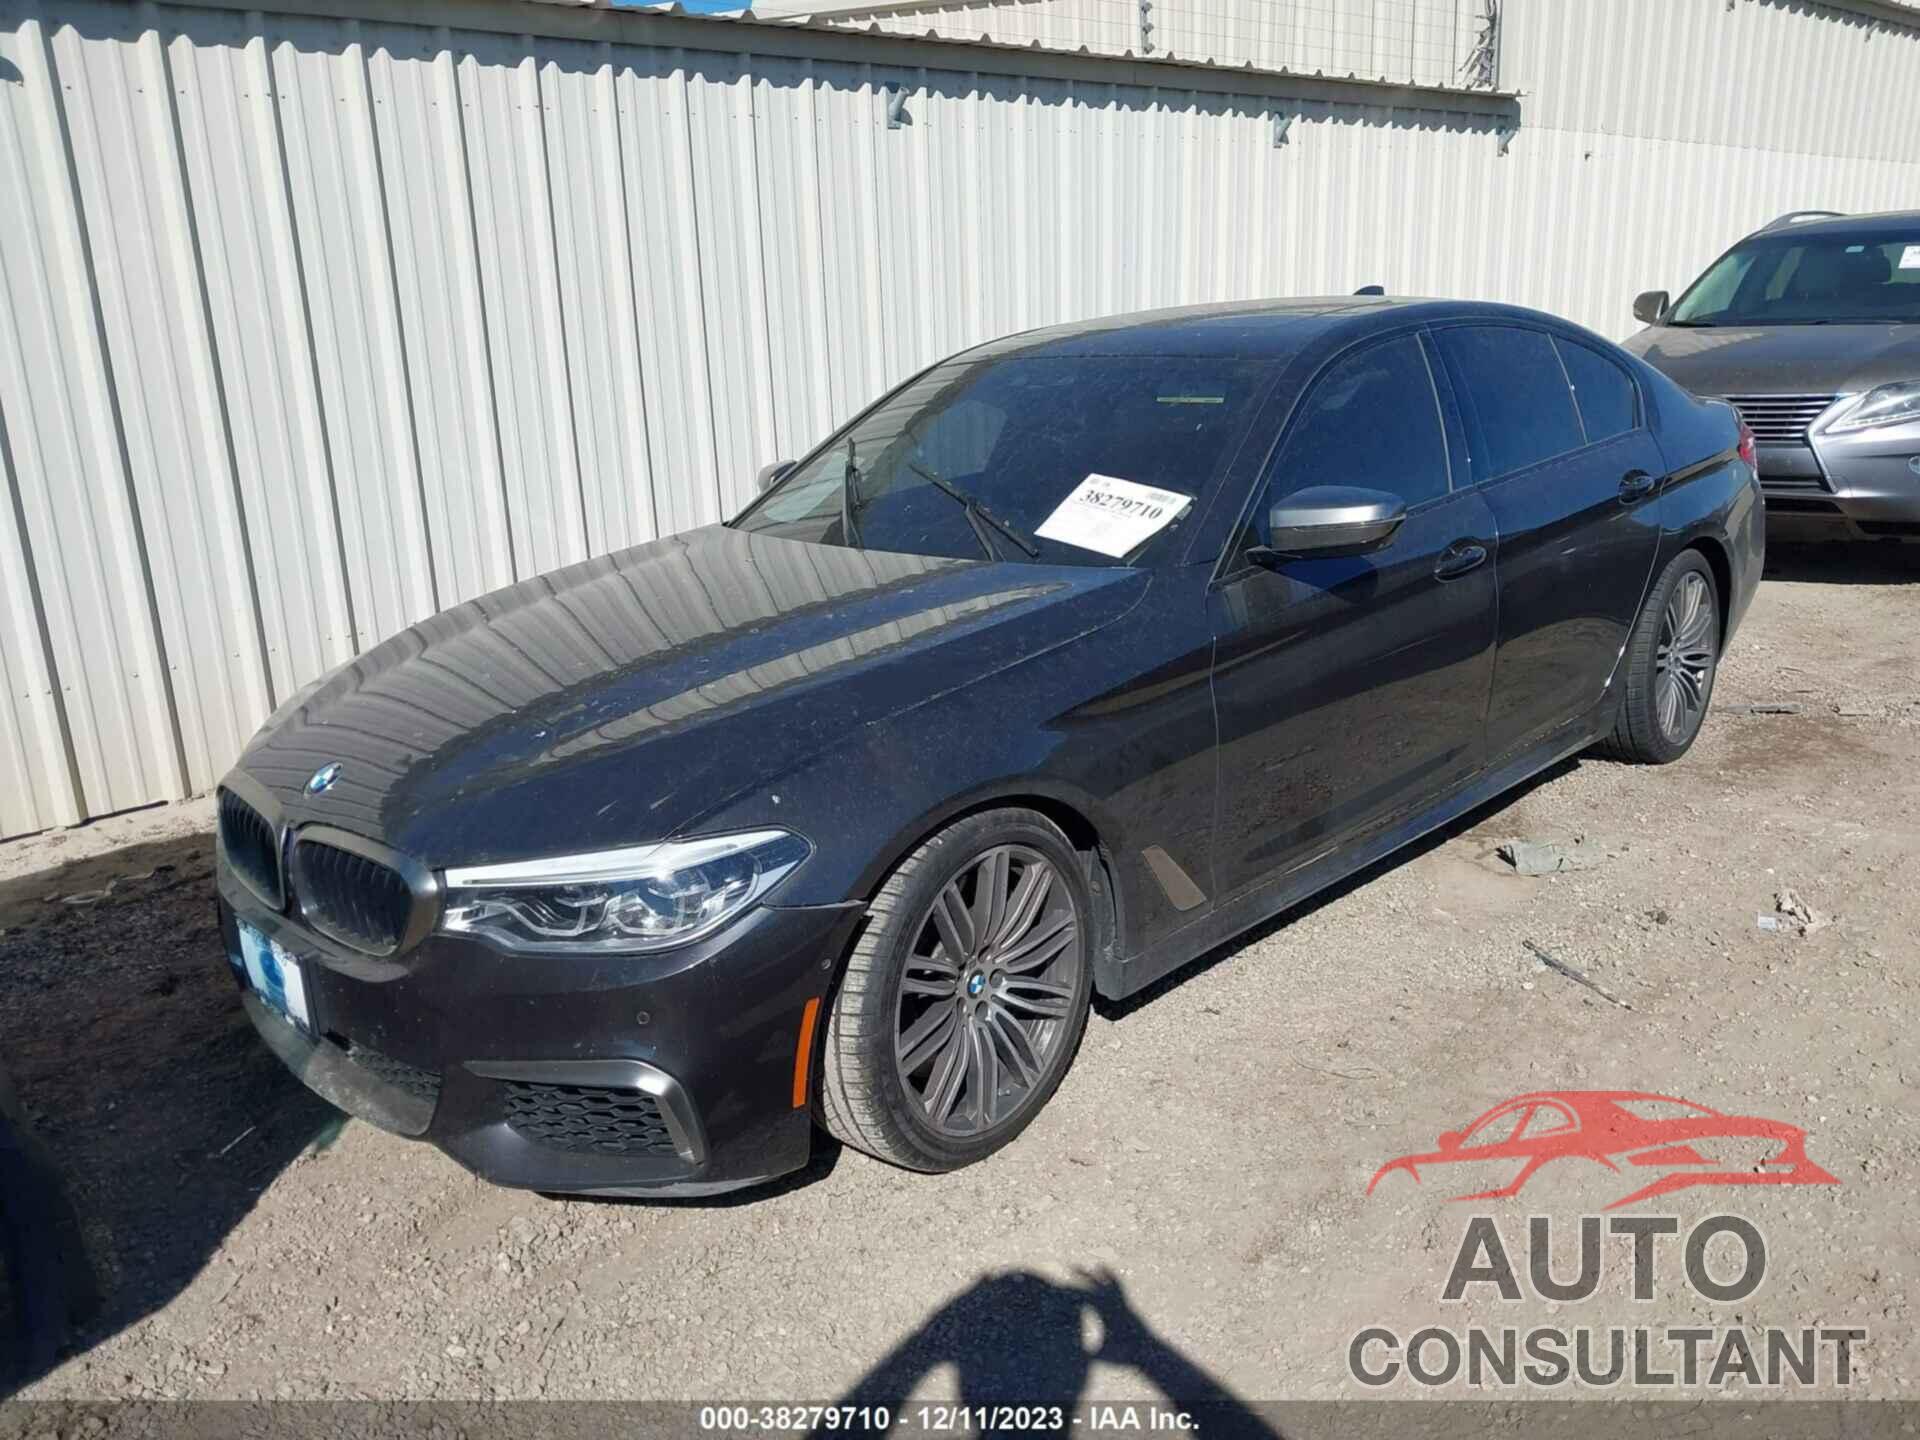 BMW 5 SERIES 2020 - WBAJS7C05LCD37656